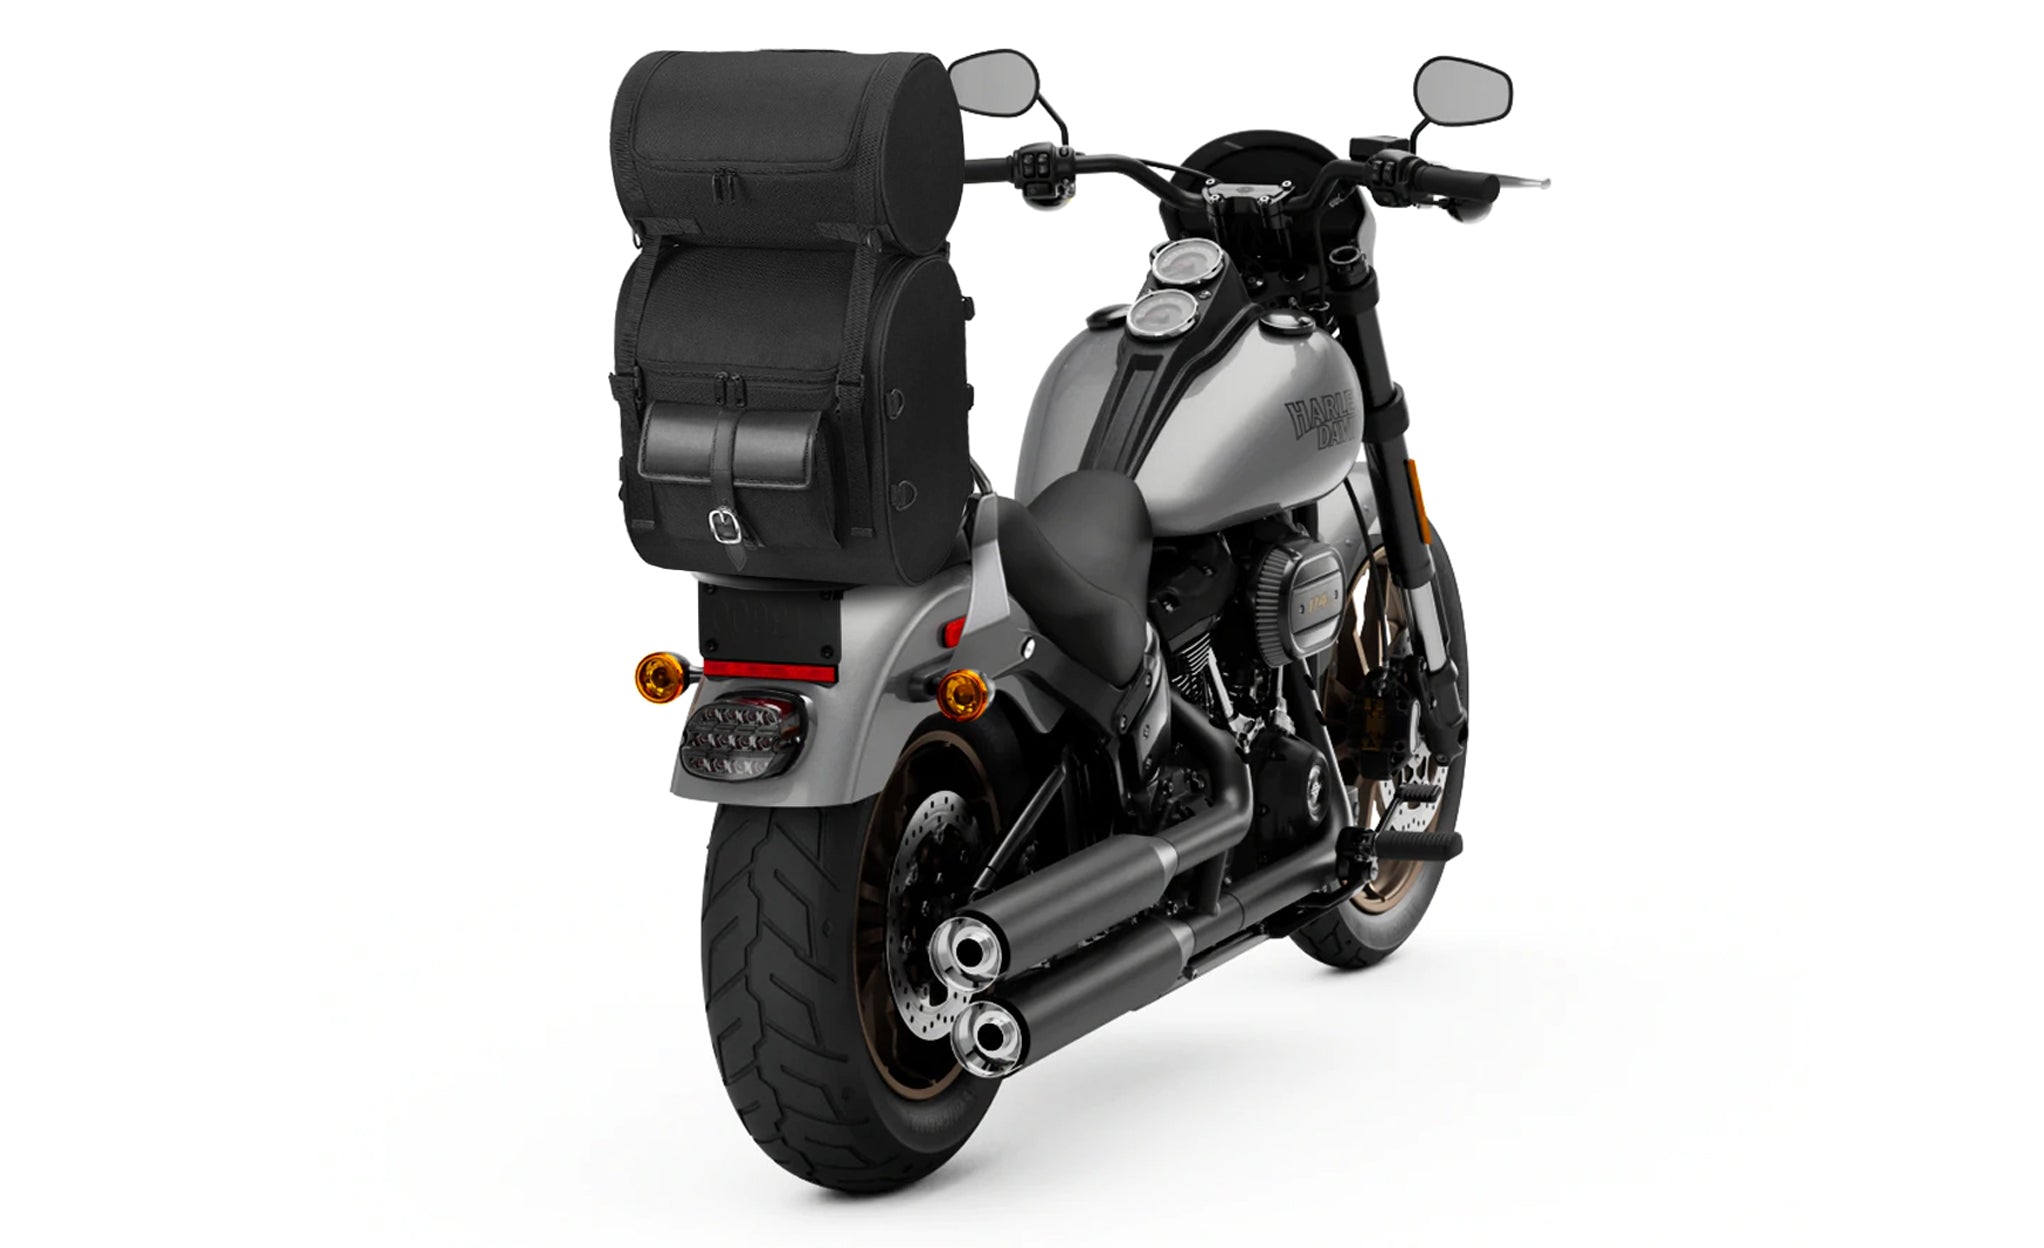 Viking Economy Line Medium Motorcycle Tail Bag for Harley Davidson Bag on Bike View @expand